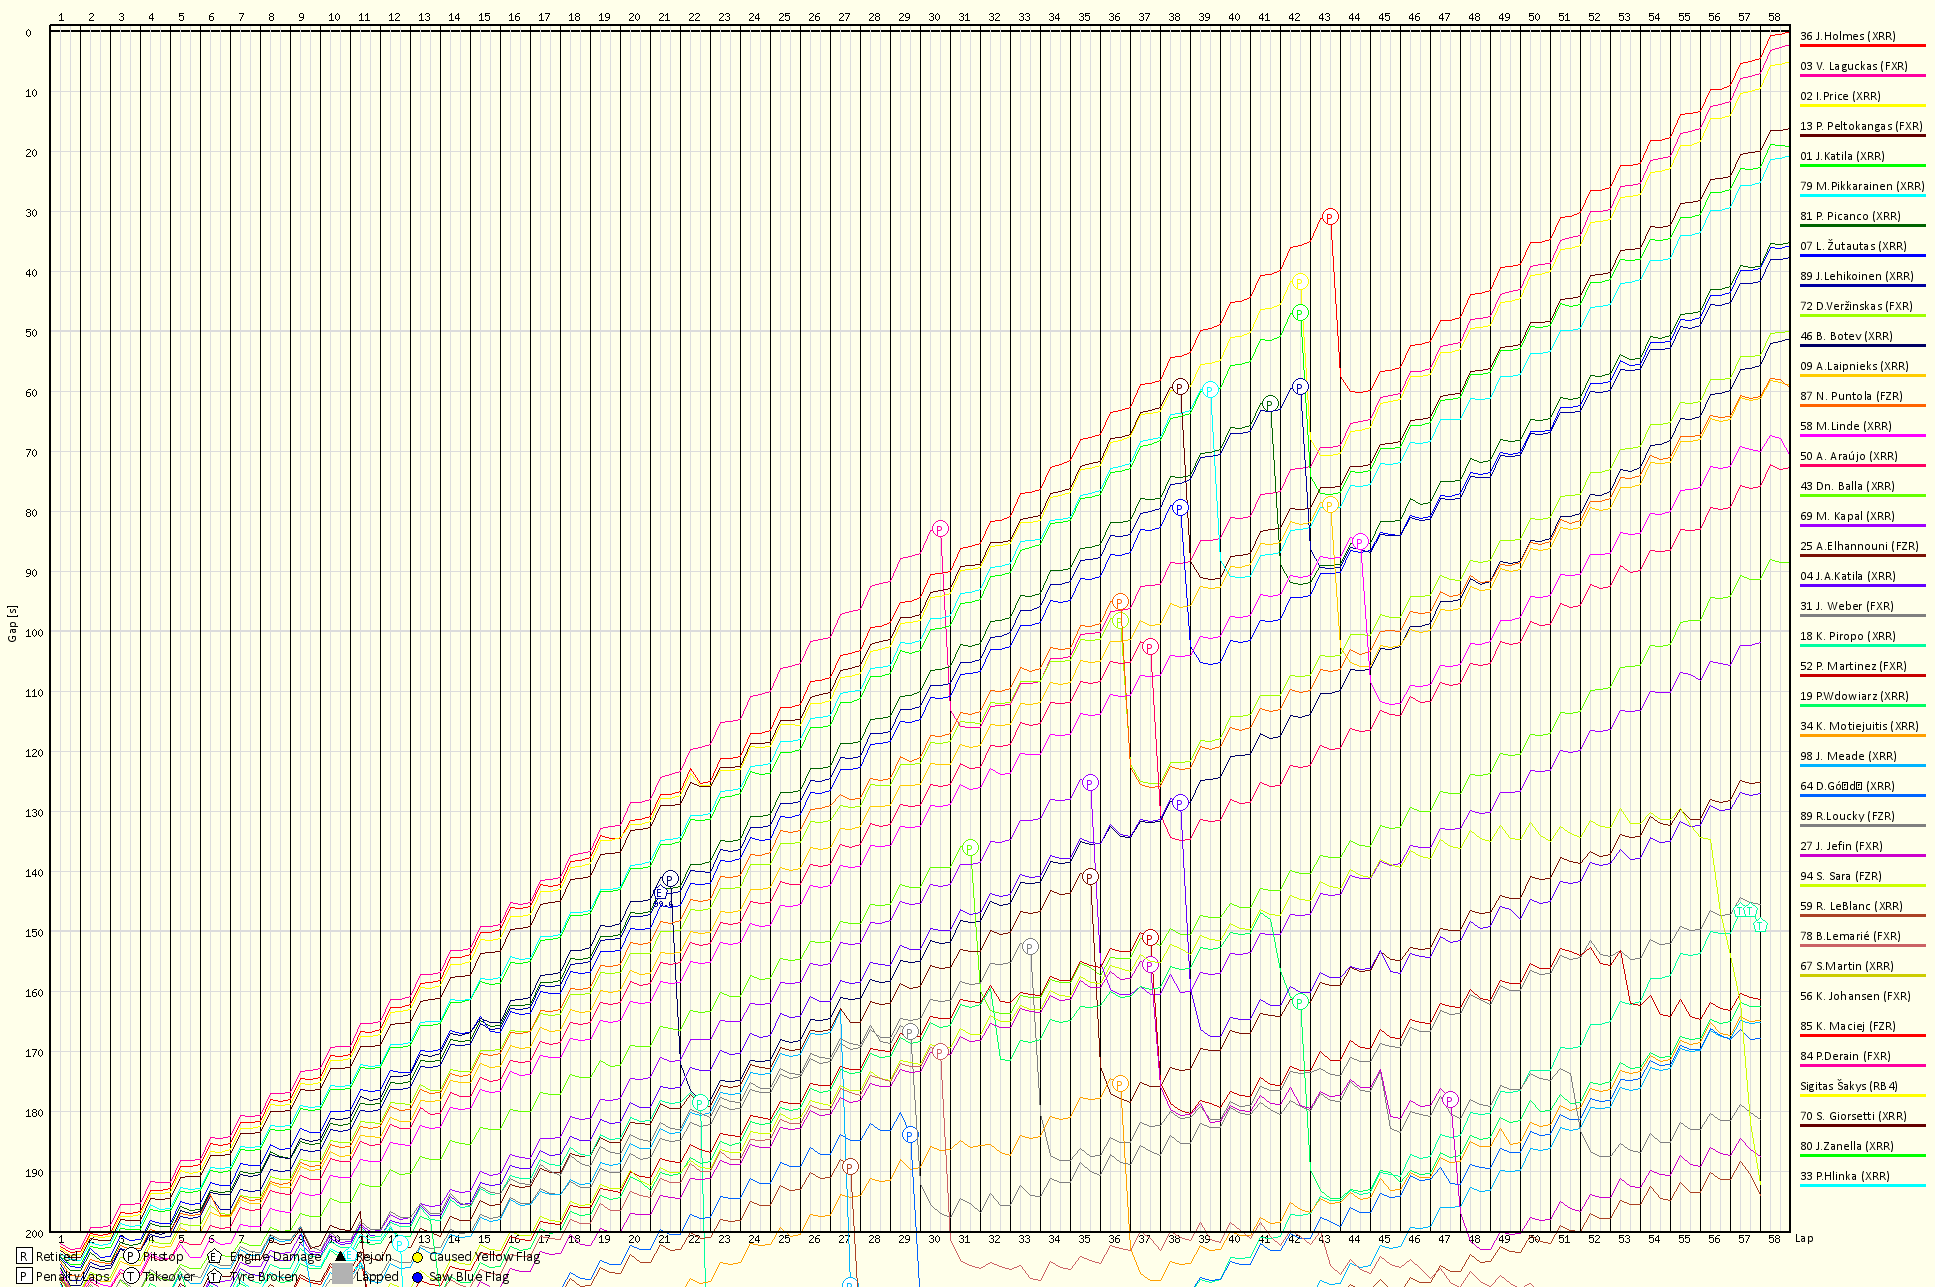 Race Progress Chart